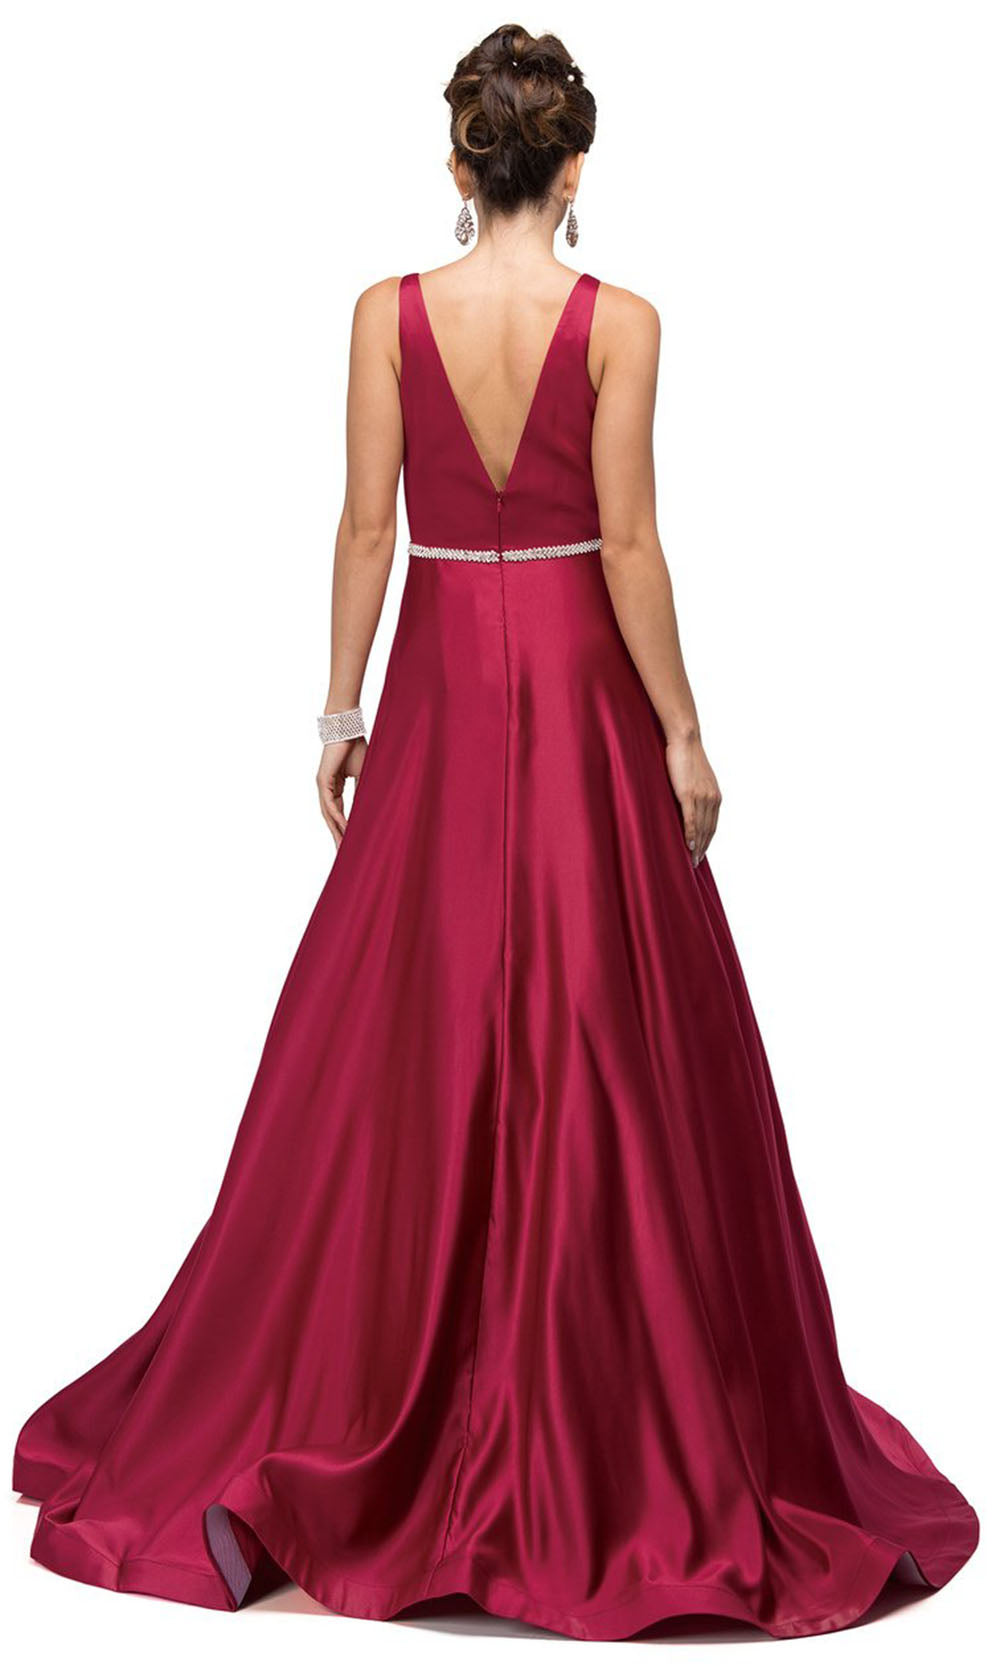 Kc Royals A-Line Dress for Sale by Robert44